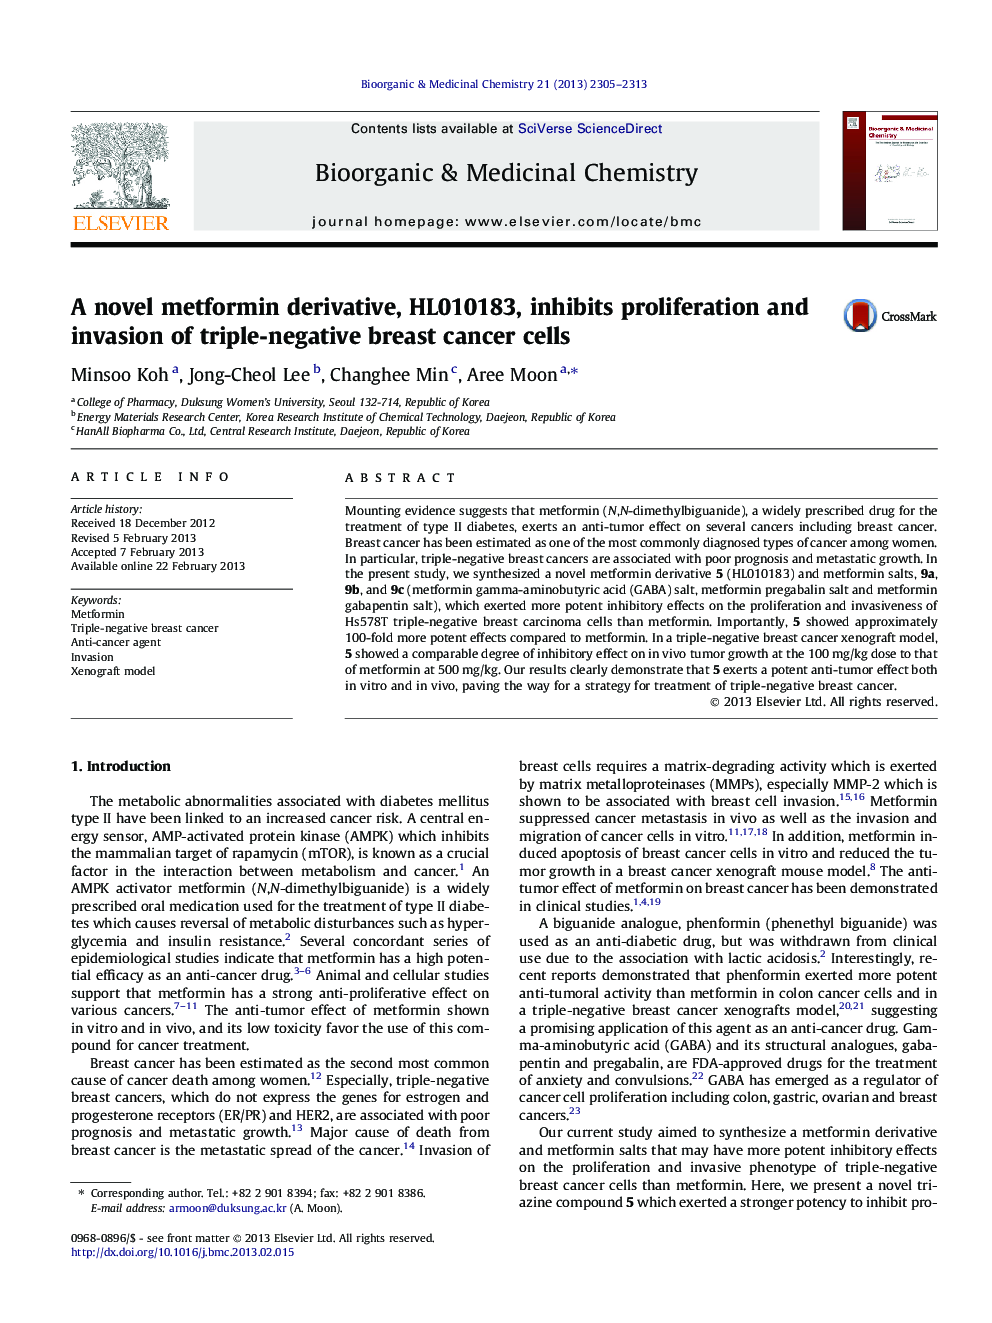 A novel metformin derivative, HL010183, inhibits proliferation and invasion of triple-negative breast cancer cells